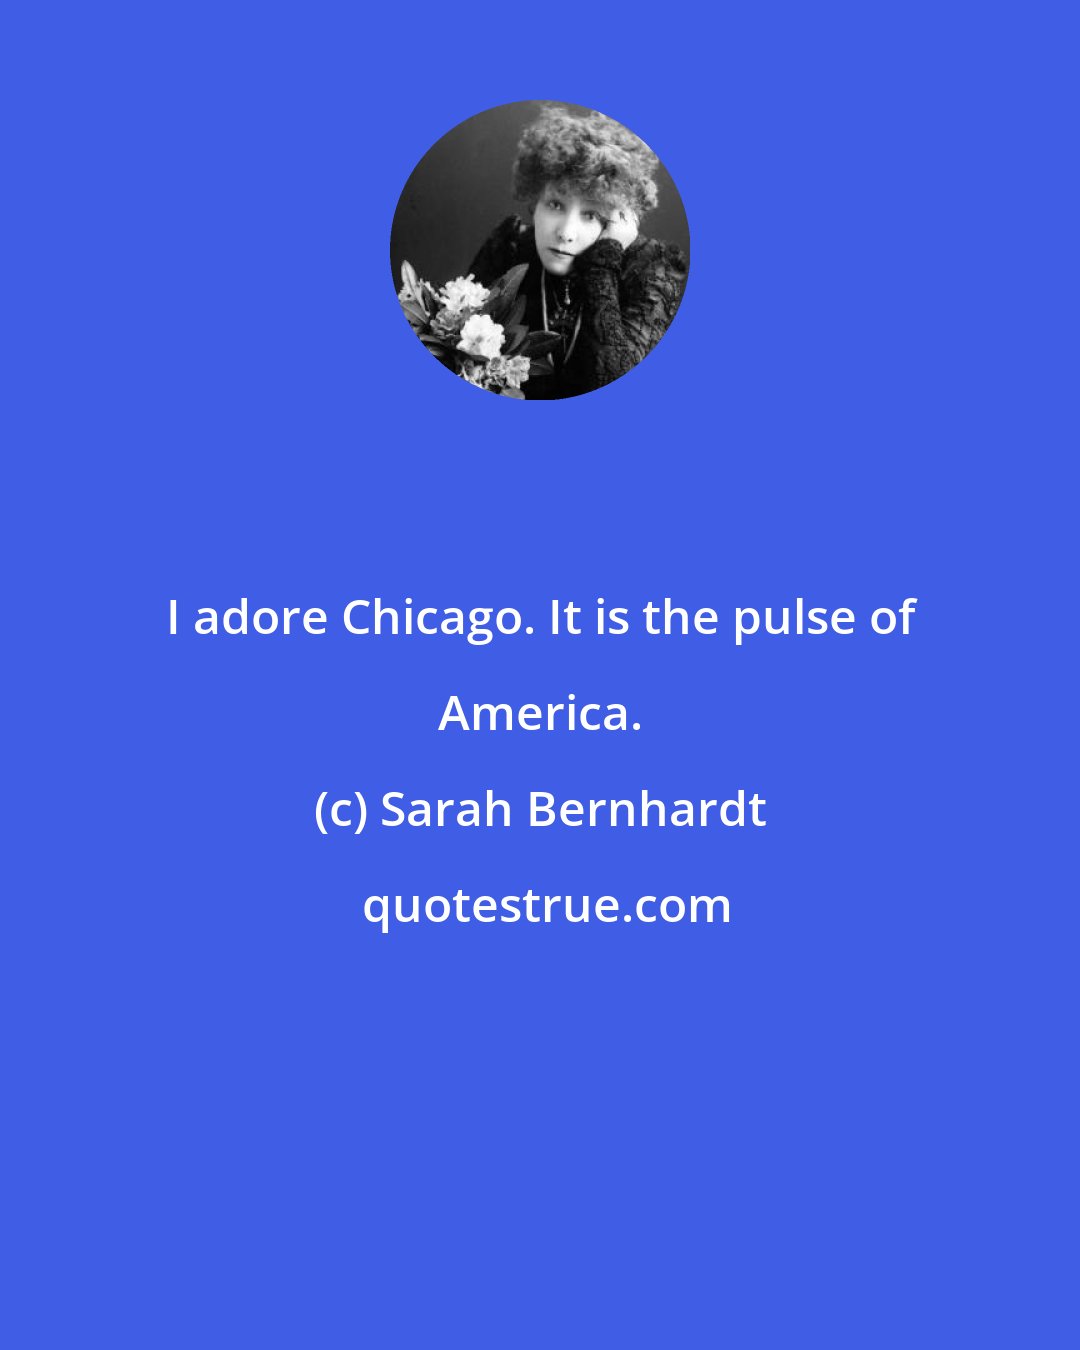 Sarah Bernhardt: I adore Chicago. It is the pulse of America.